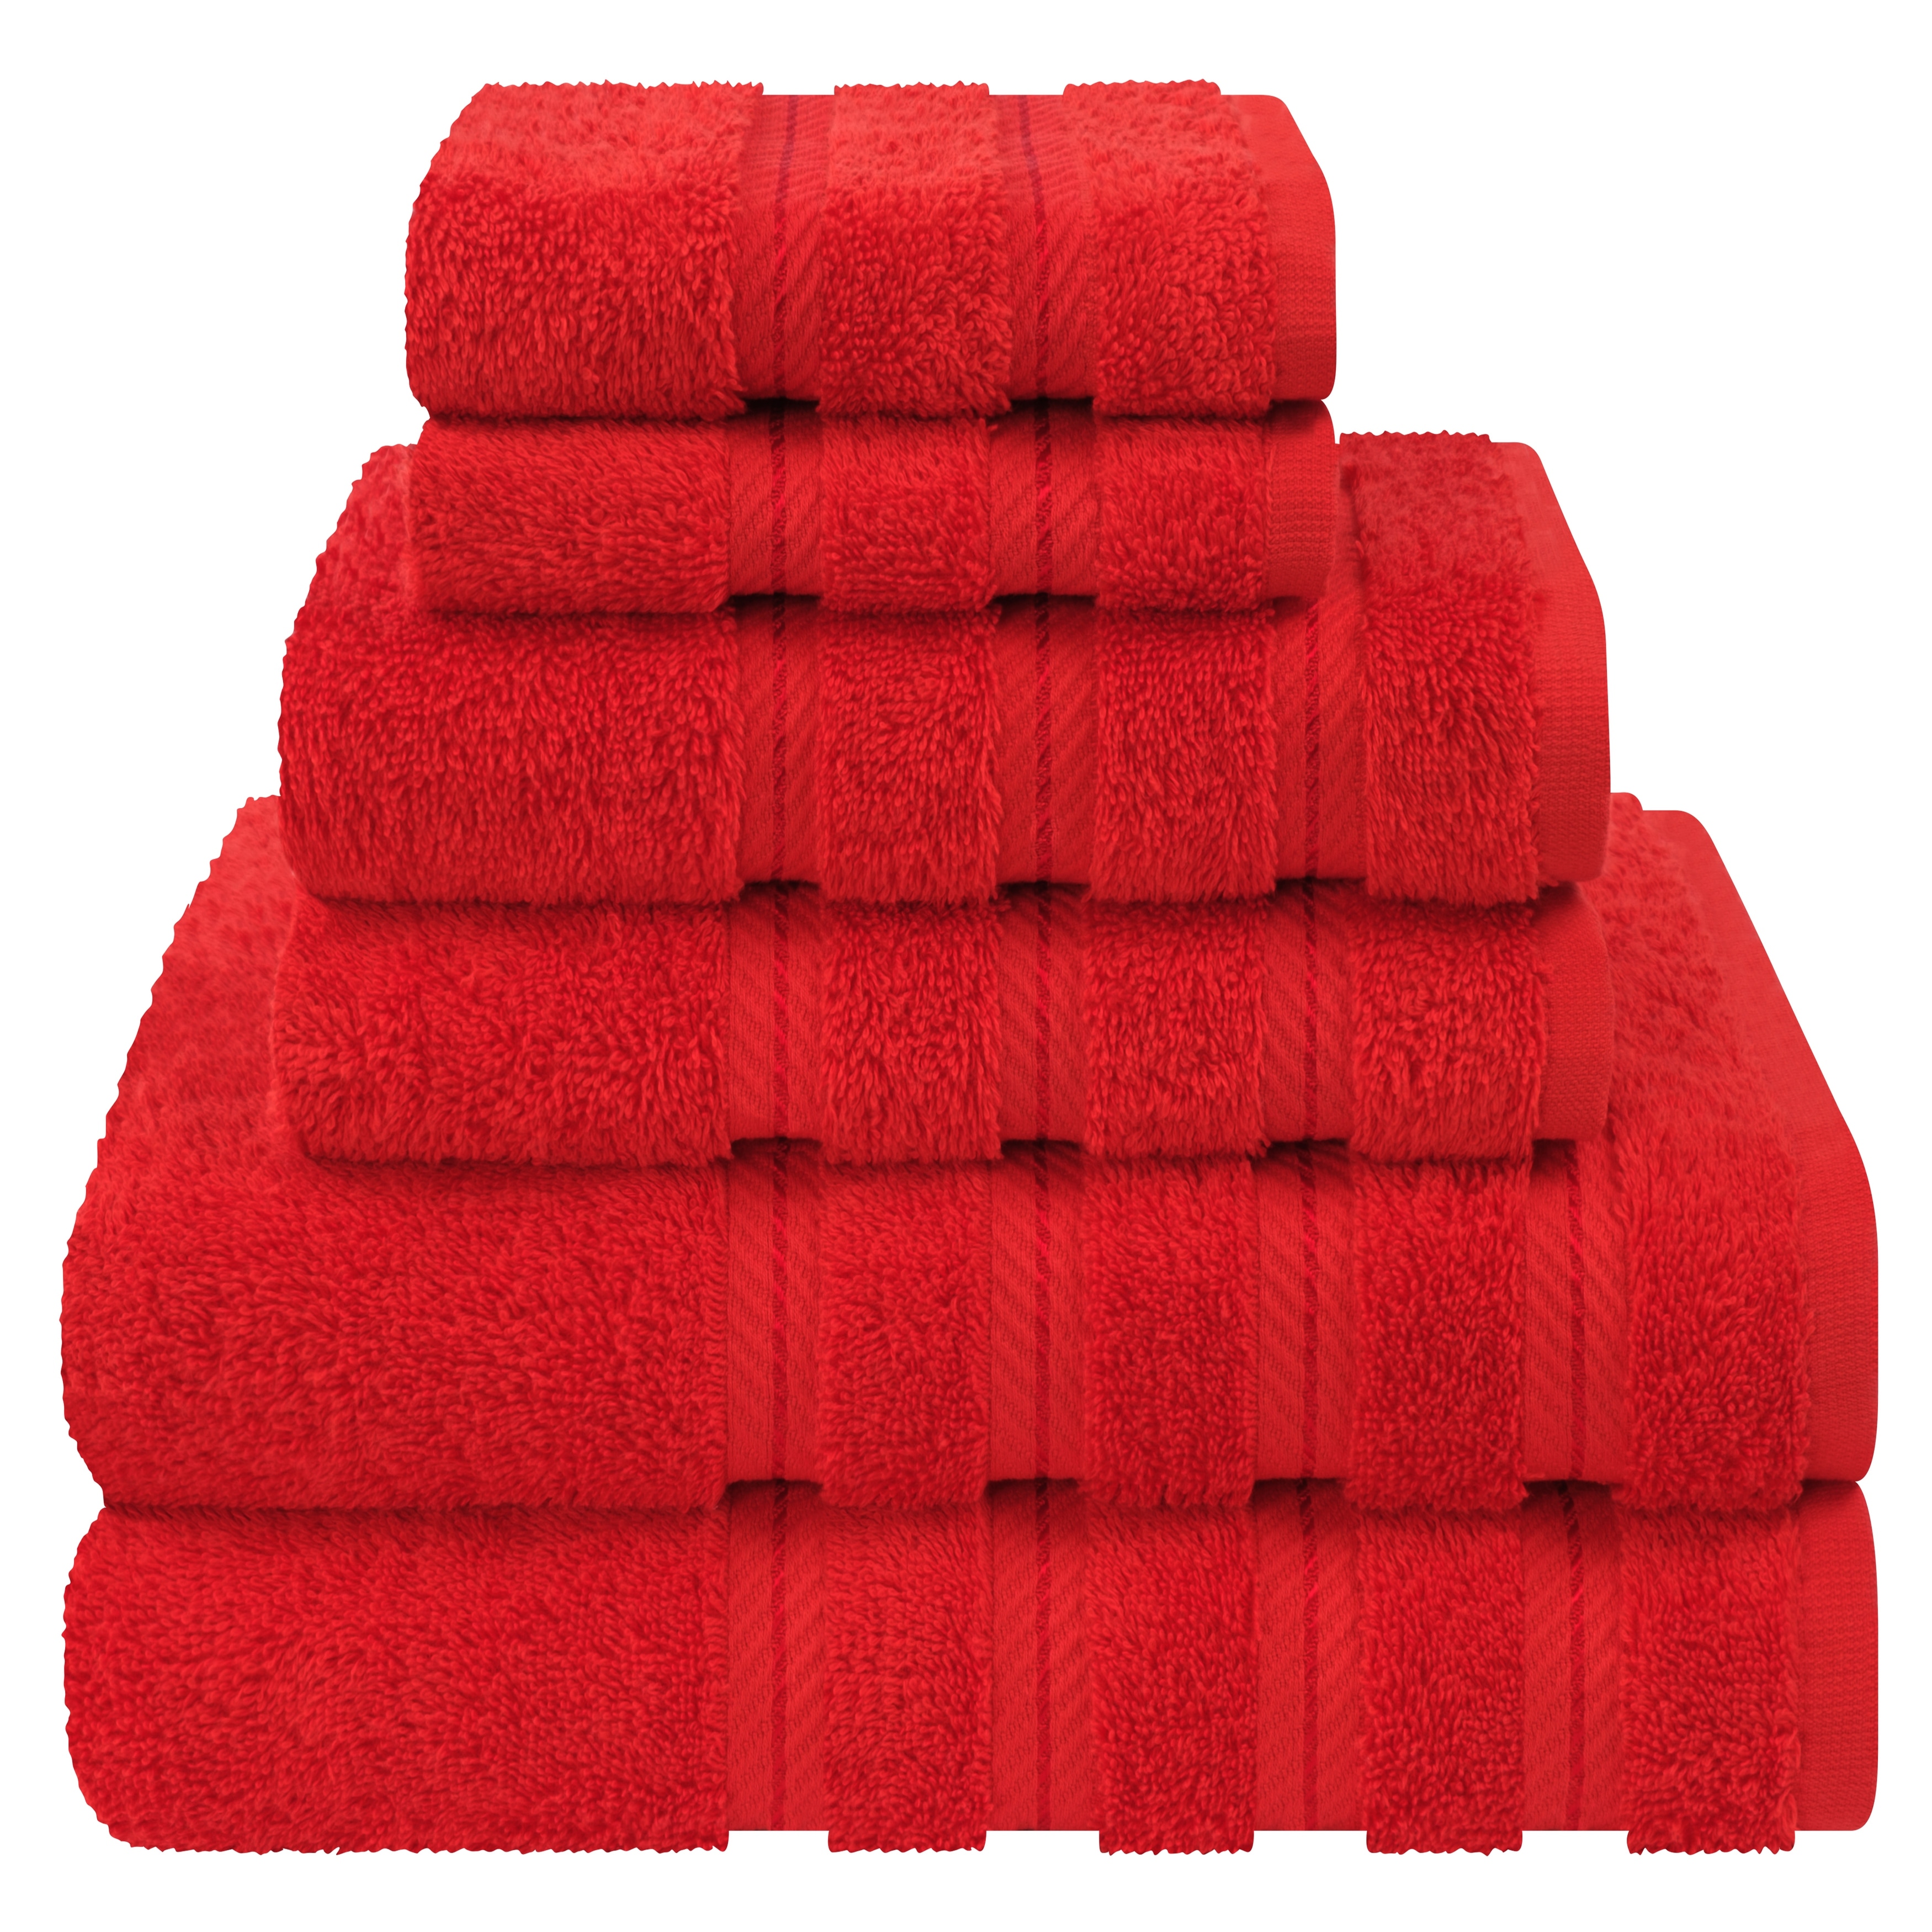 https://ak1.ostkcdn.com/images/products/is/images/direct/d1516076cb12defe1eada8fb1afb7b09271ffeab/American-Soft-Linen-6-Piece-Turkish-Cotton-Bath-Towel-Set.jpg